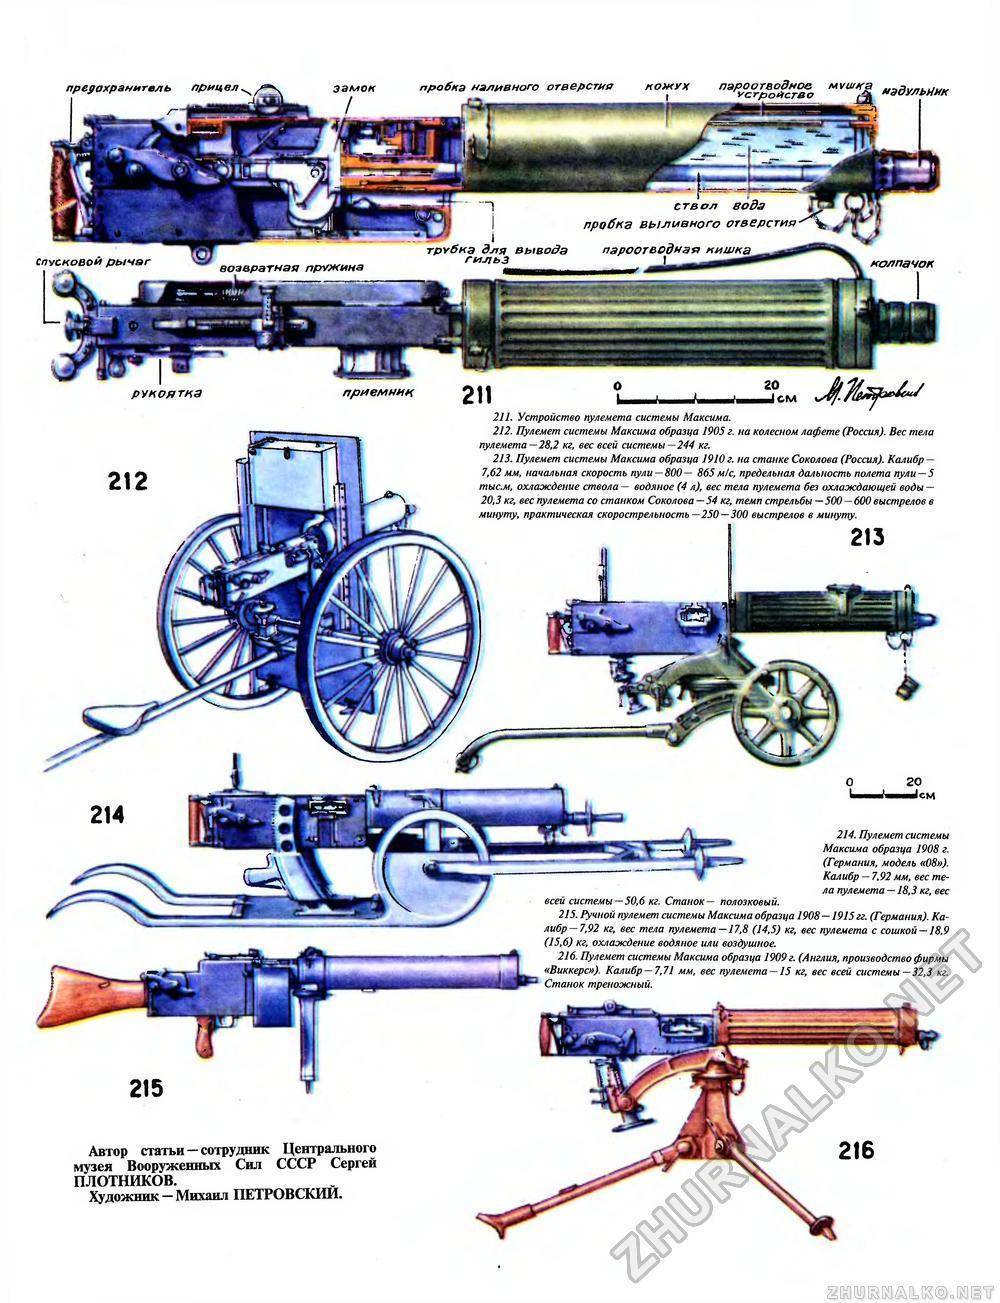 Пулемет гатлинга: принцип работы, характеристики